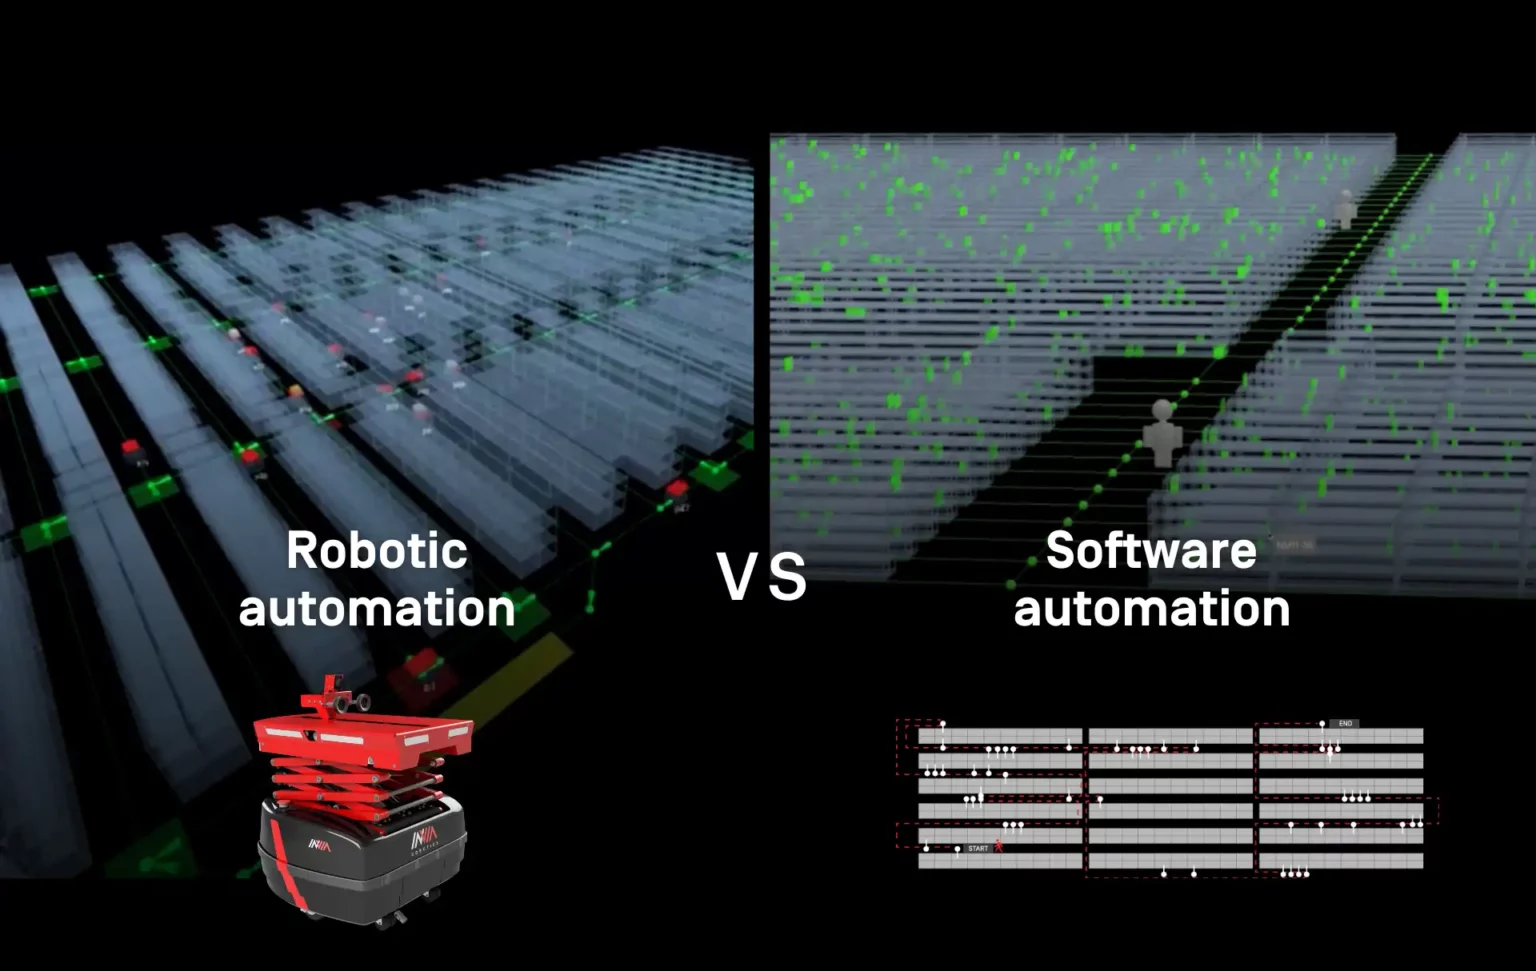 Robotics automation vs Software automation